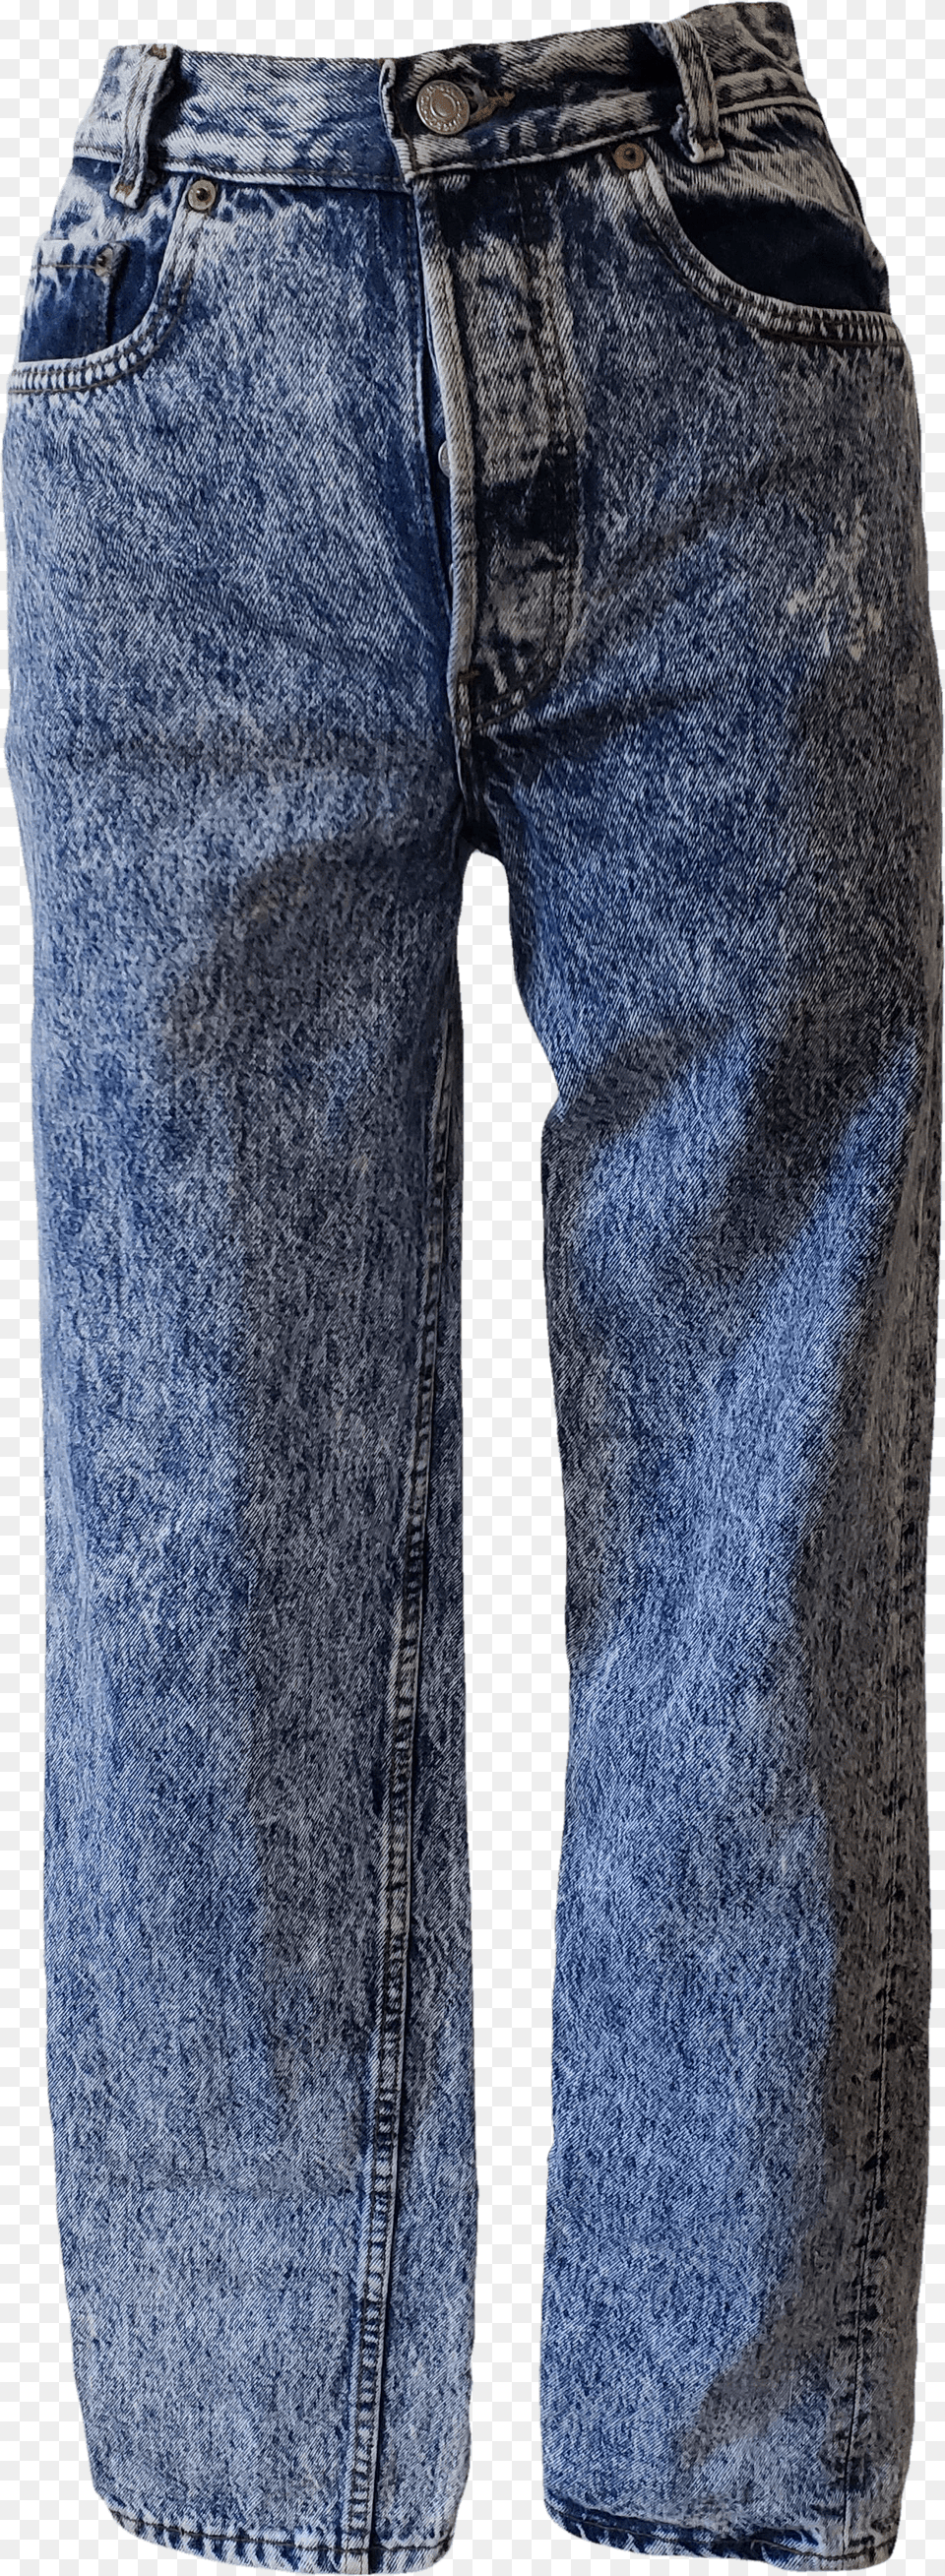 Skinny Acid Wash Jeans By Levi S Pocket, Clothing, Pants, Shorts Png Image